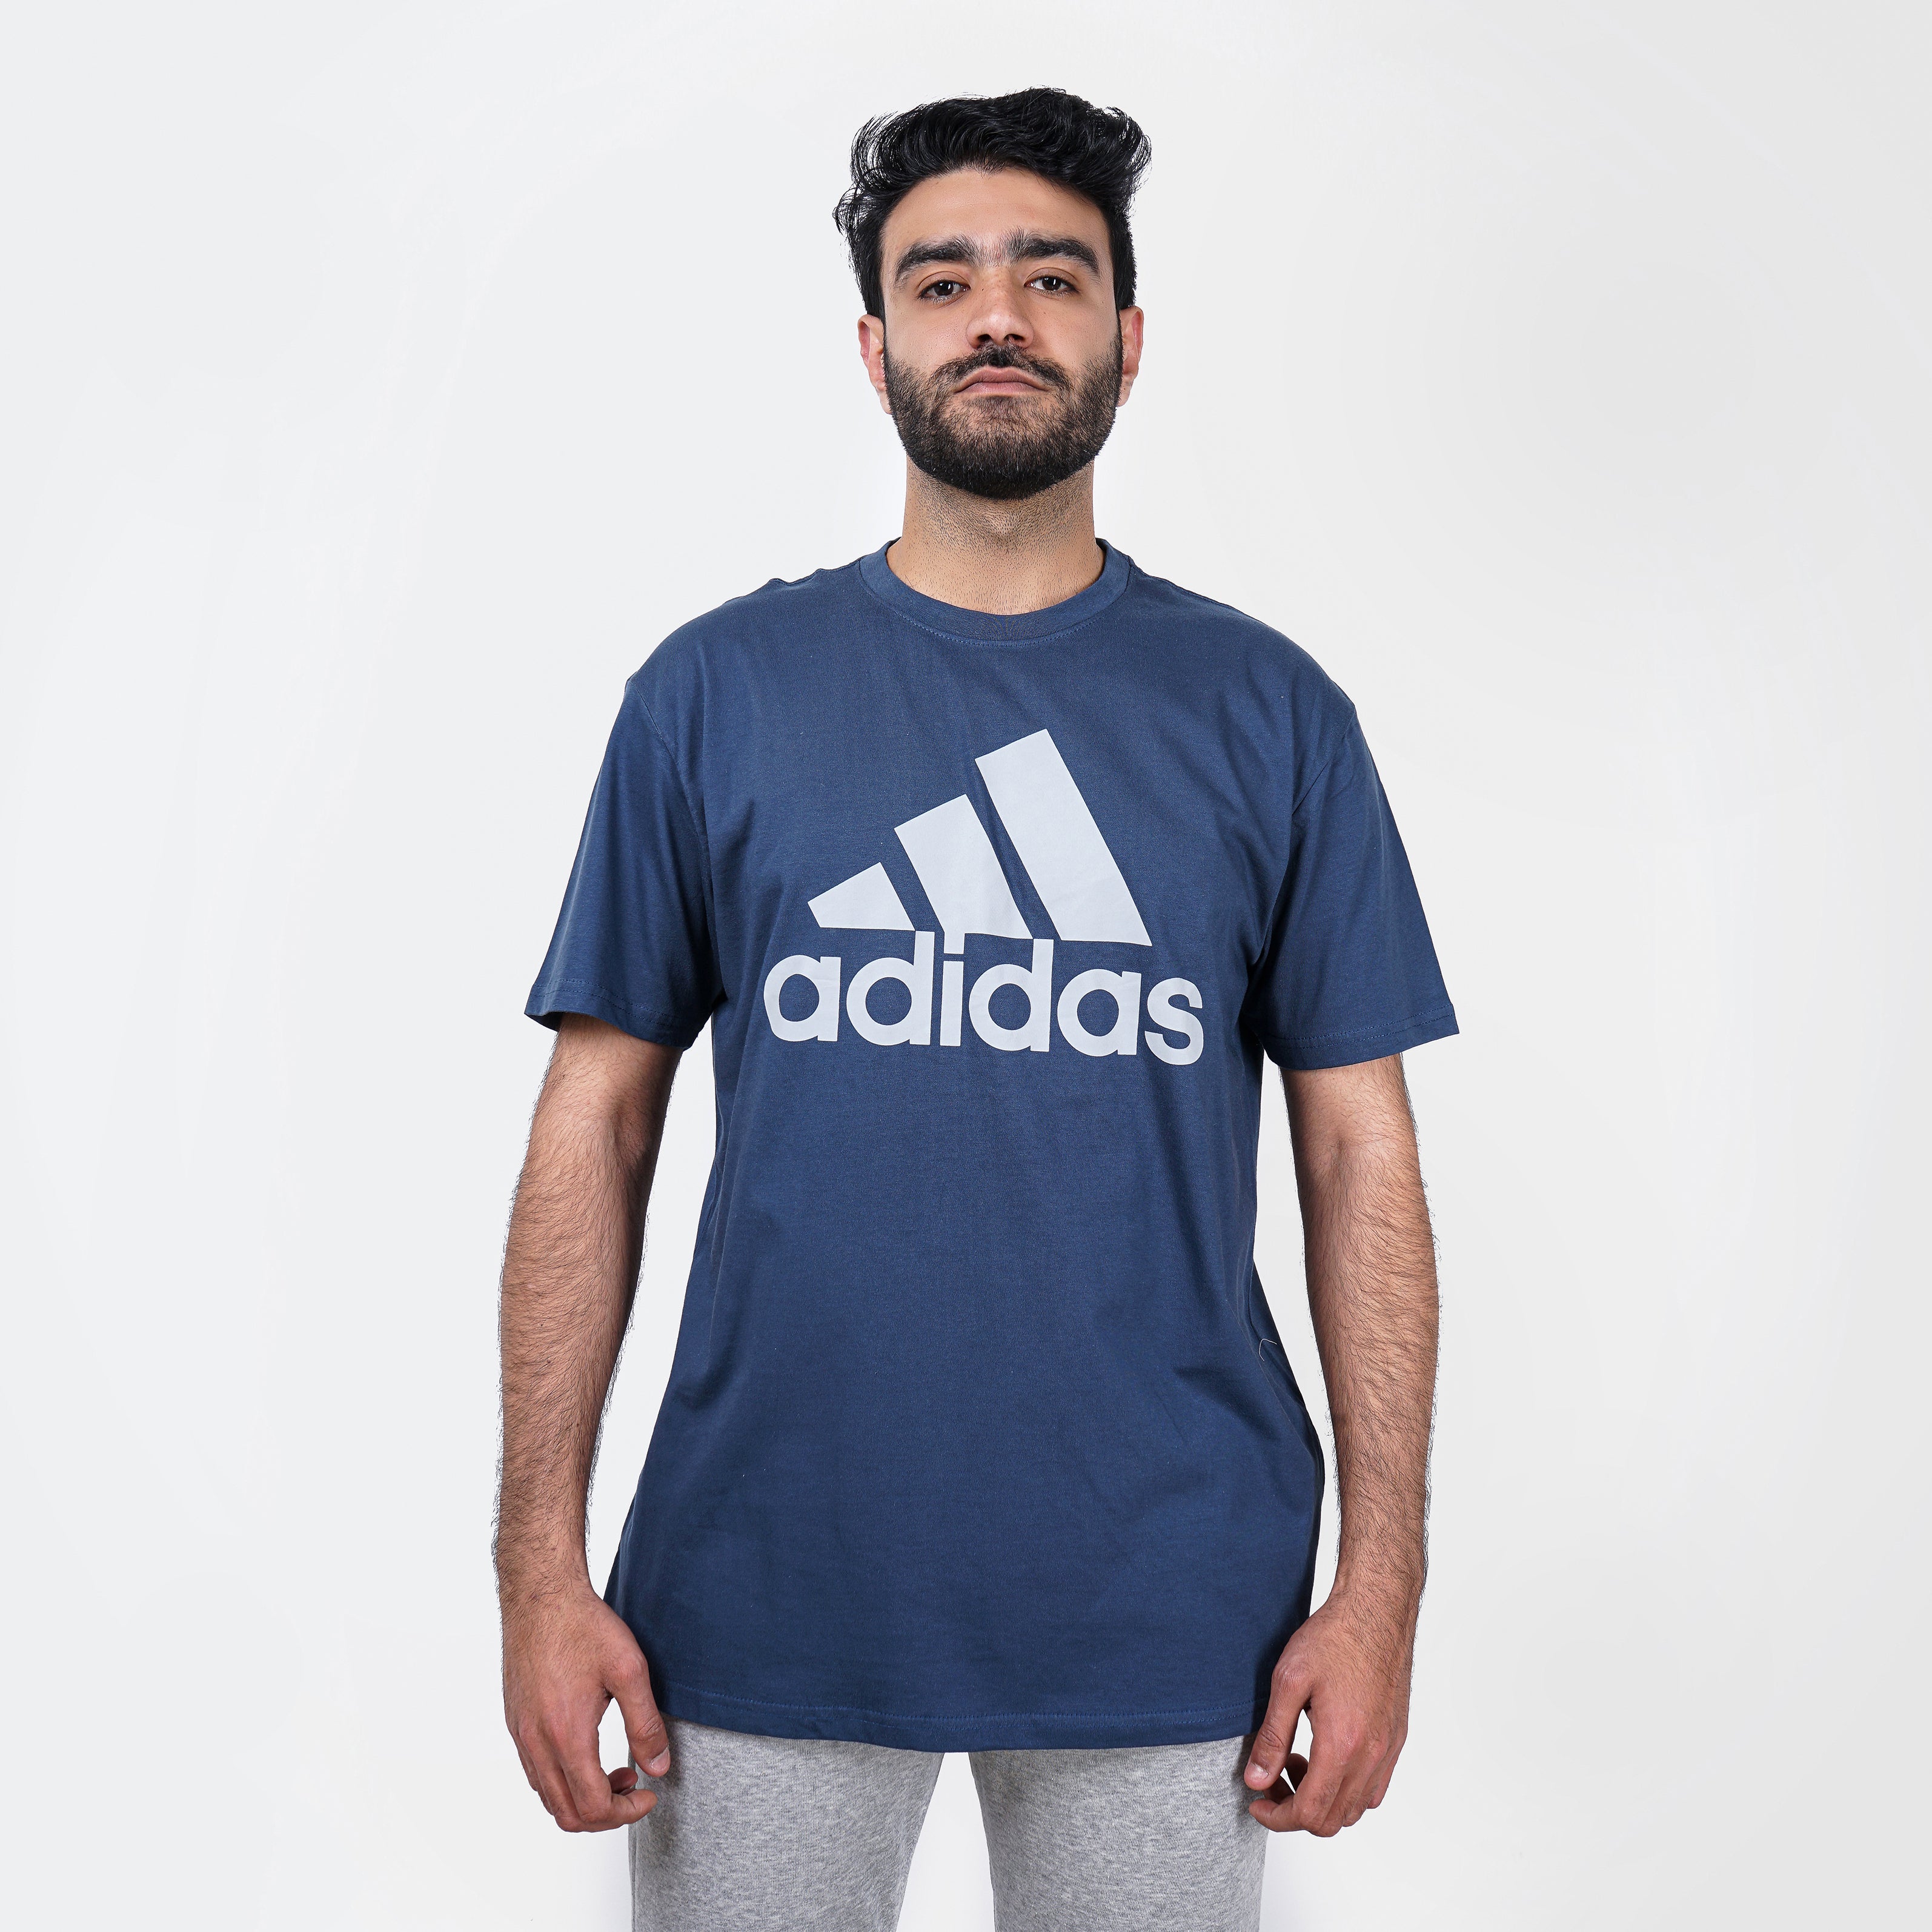 Original Blue Adidas Short Sleeve T-Shirt with White Logo - Marca Deals - Adidas